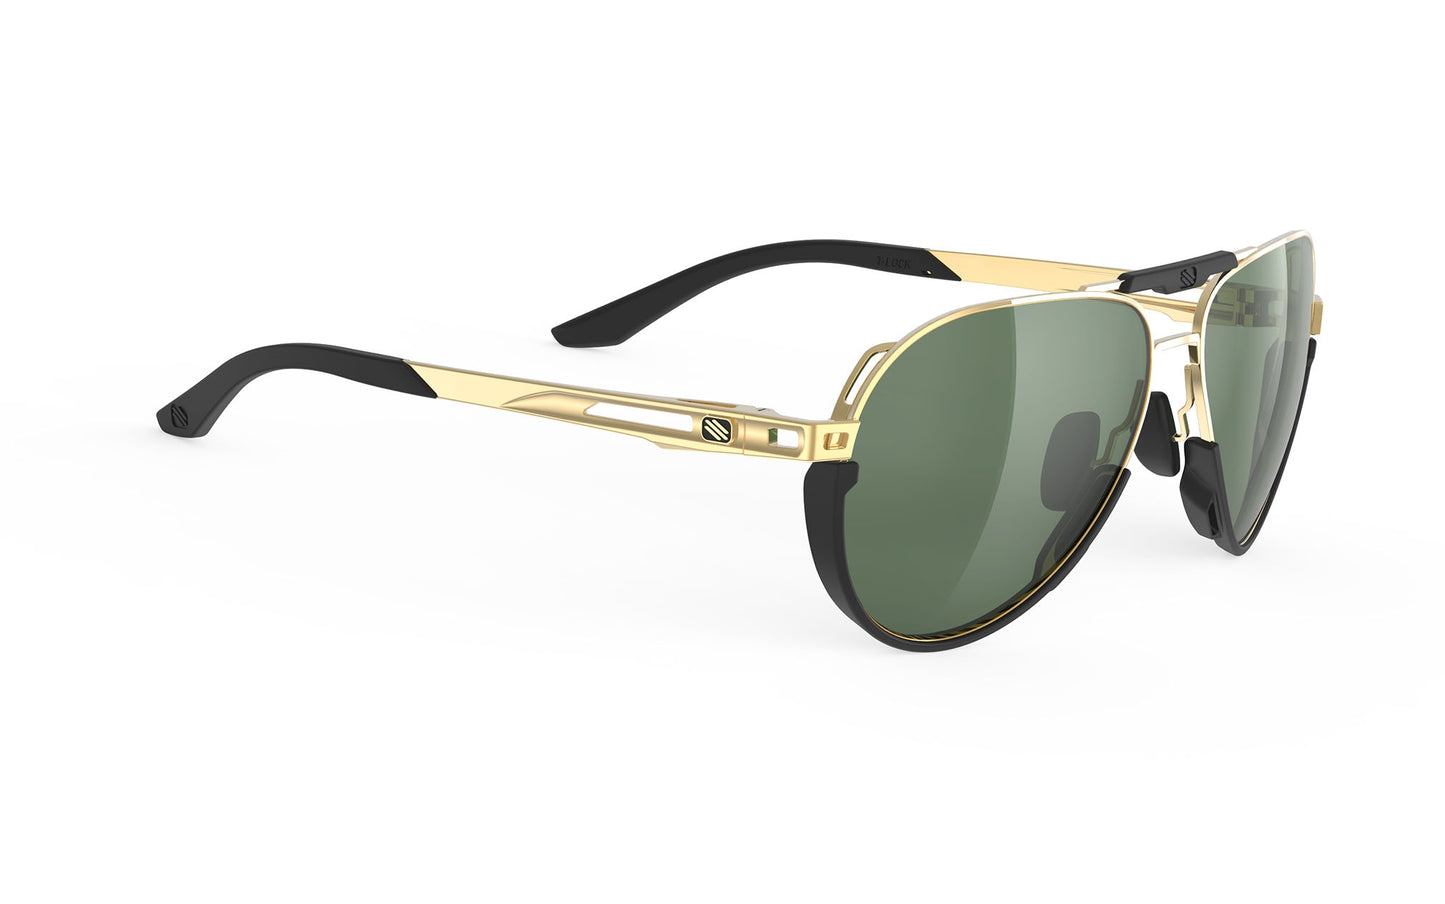 Rudy Project Skytrail Light Gold Shiny - Rp Optics Green Sunglasses